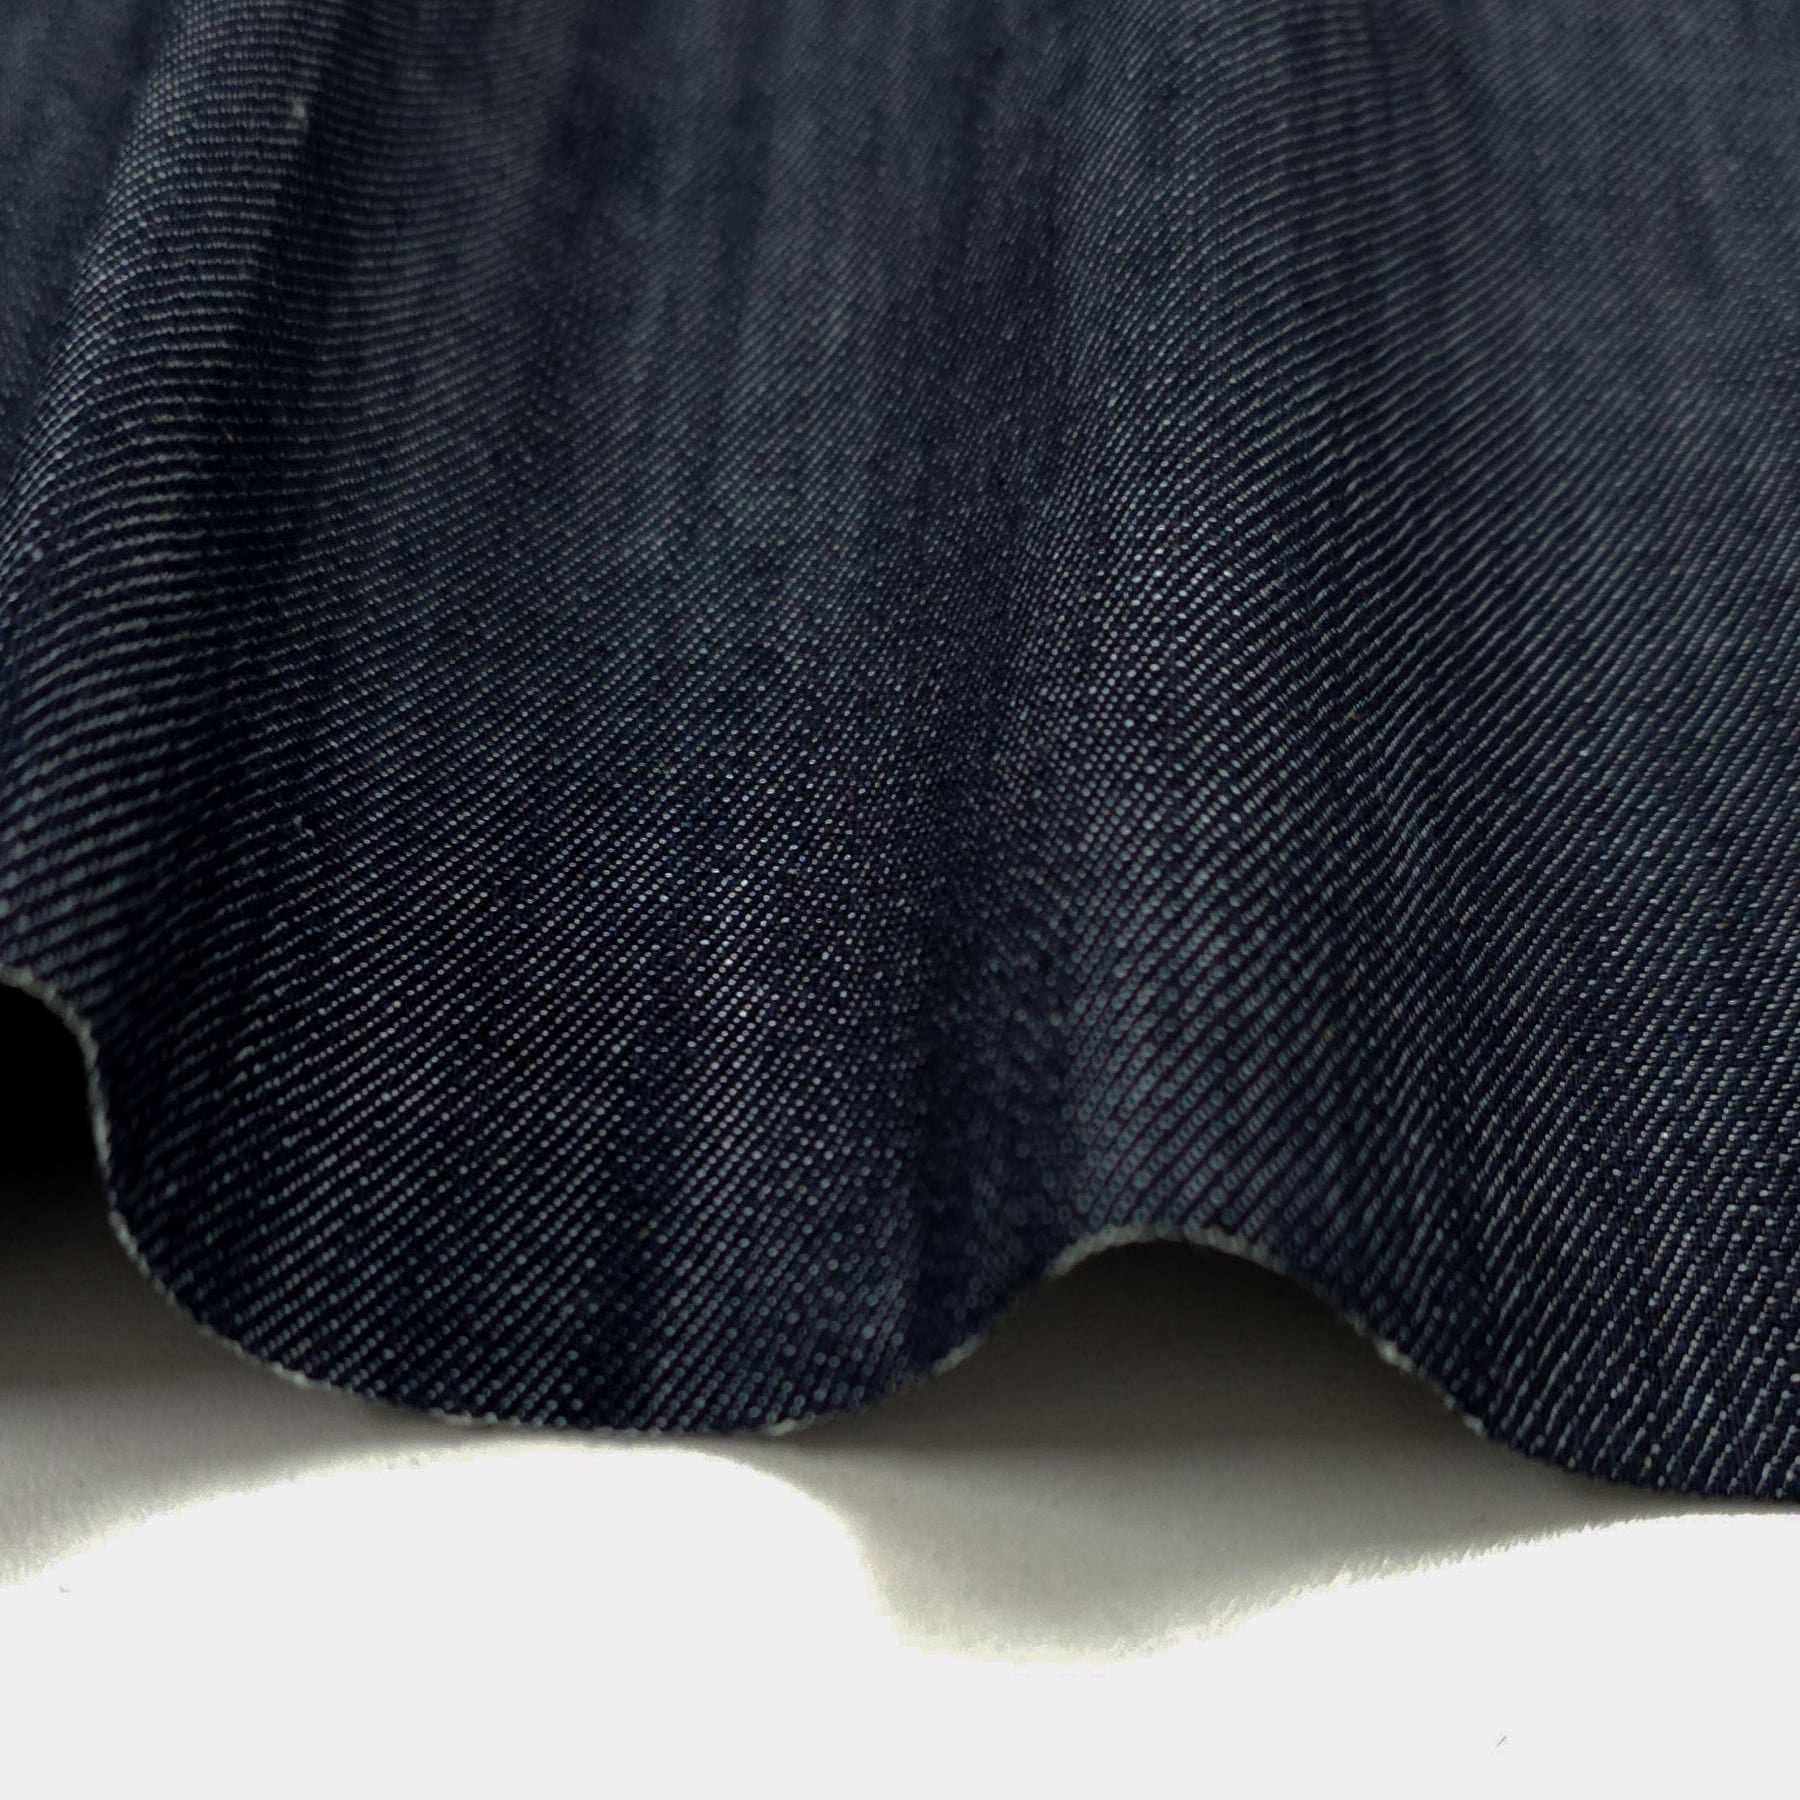 Buy Denim Fabric Washed Denim Fabric in Denim Blue  Light Blue Online in  India  Etsy